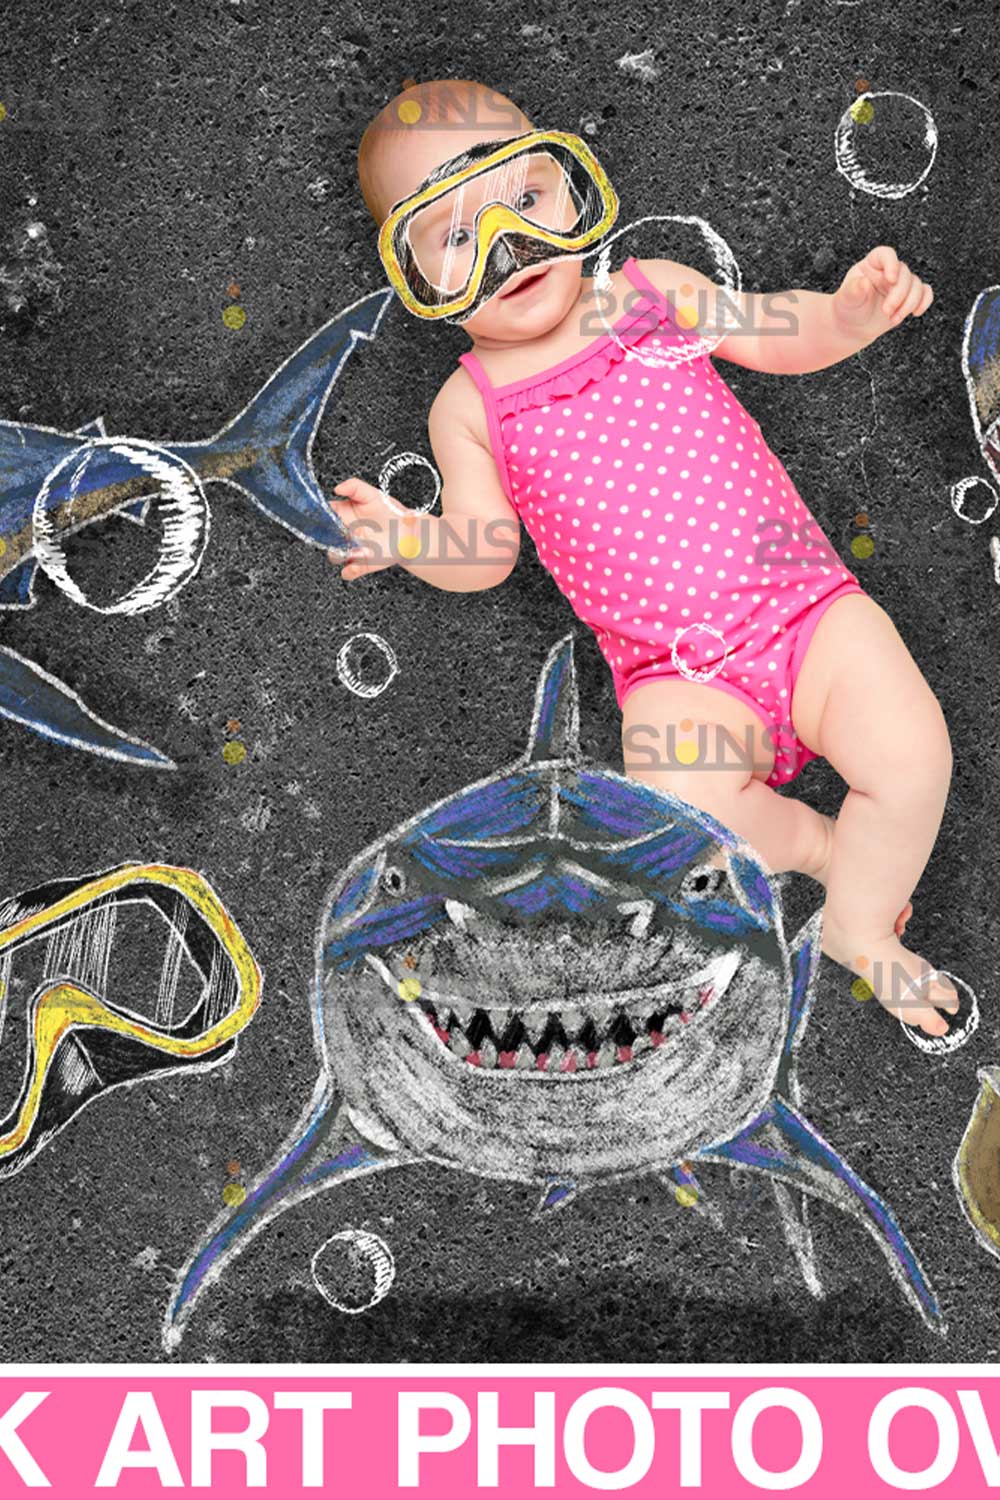 Baby Shark Backdrop And Beach Sidewalk Chalk Art Overlay pinterest image.